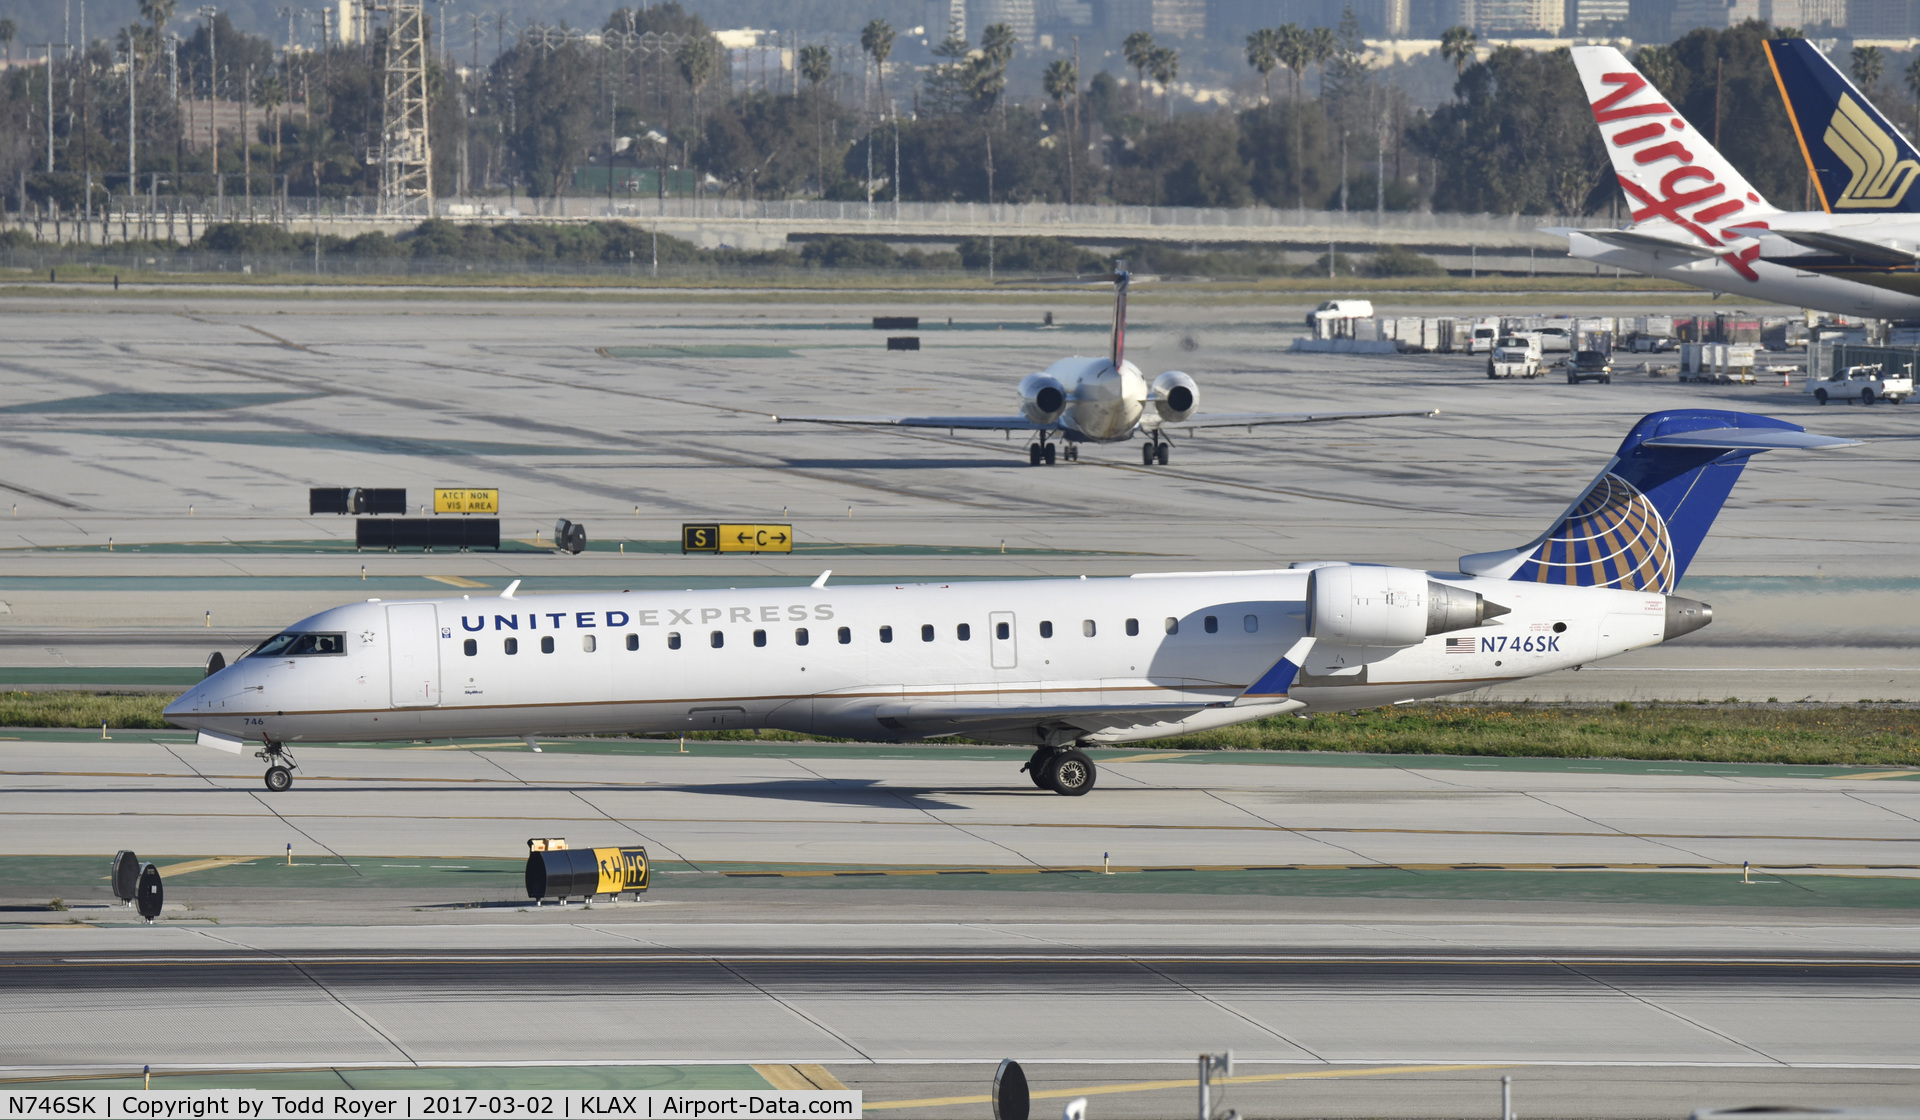 N746SK, 2005 Bombardier CRJ-700 (CL-600-2C10) Regional Jet C/N 10202, Arrived at LAX on 25L